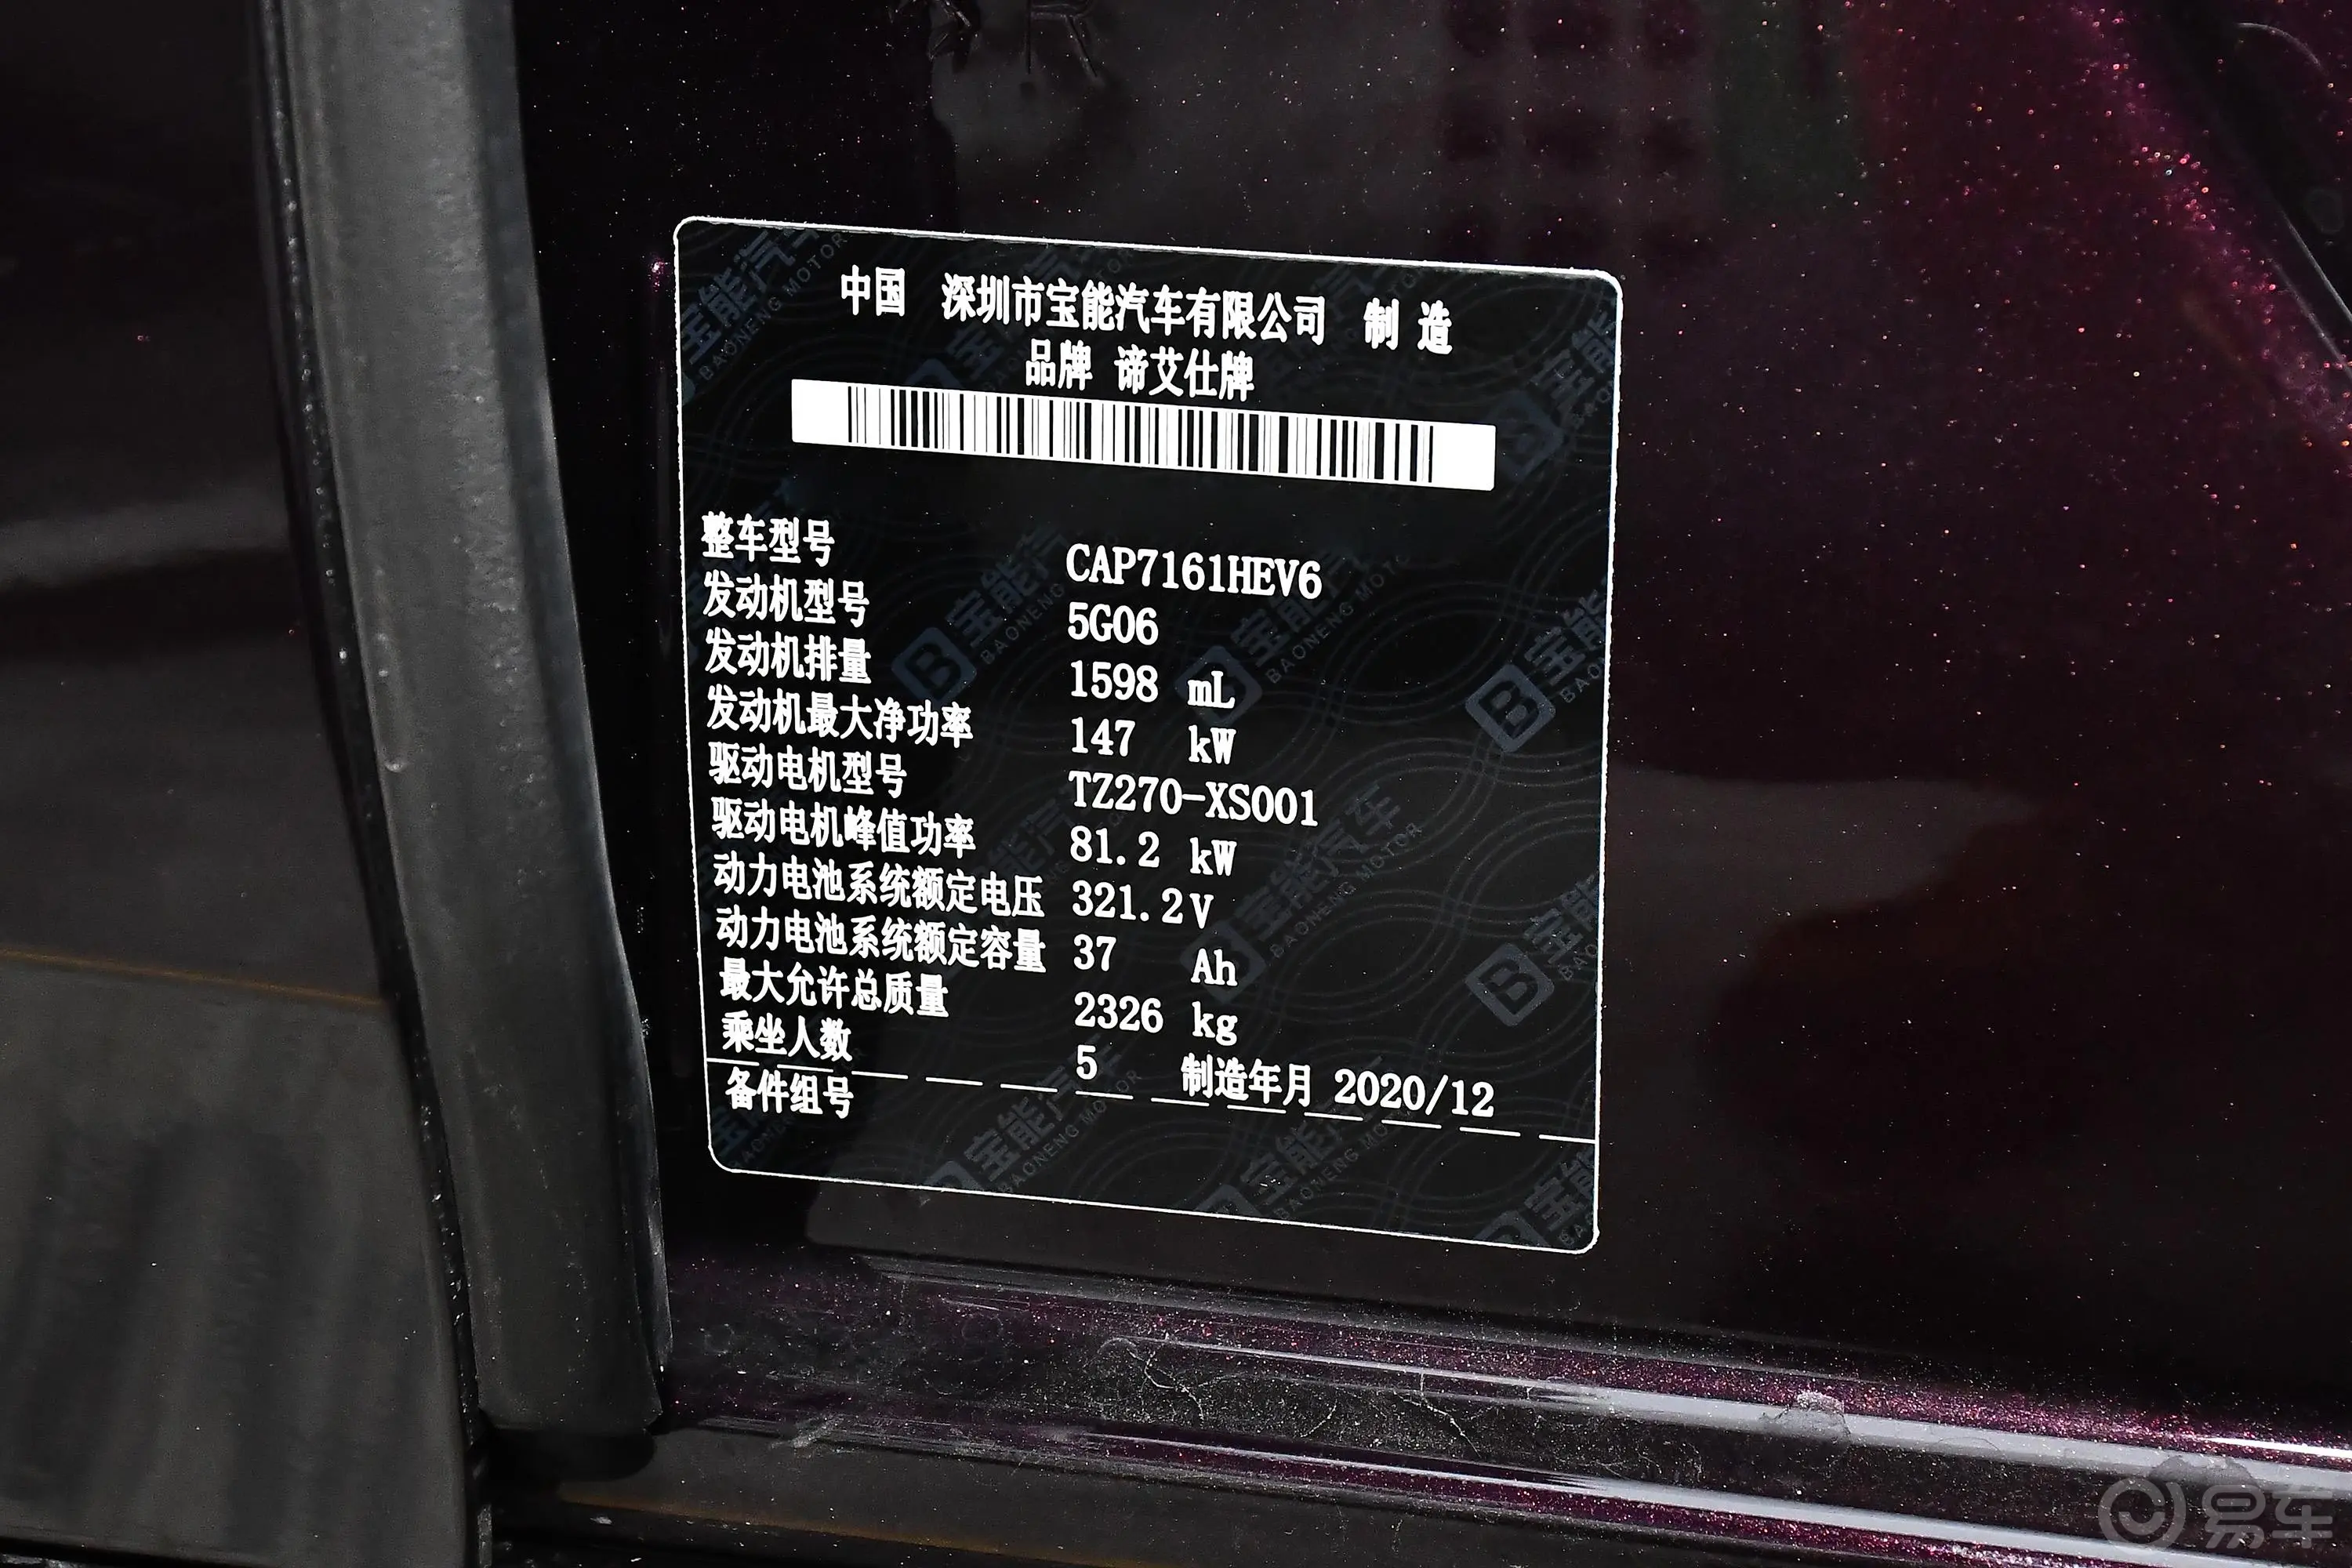 DS 9 E-TENSE1.6T 里沃利版车辆信息铭牌